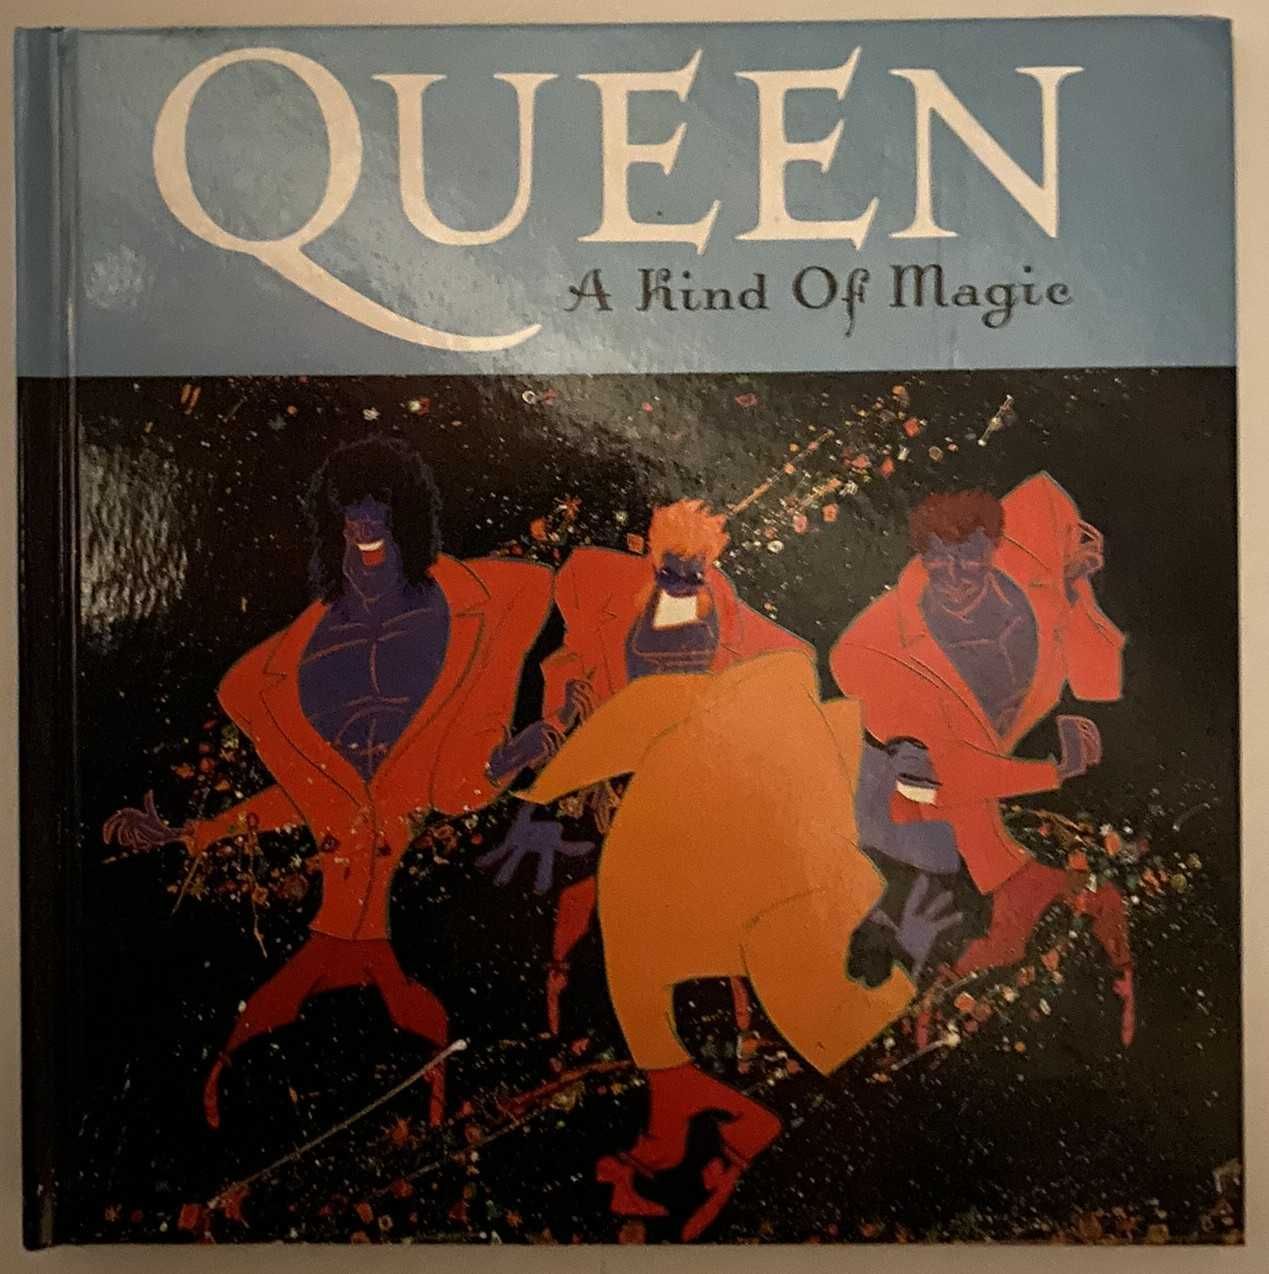 Livro CD dos Queen, A Kind Of Magic